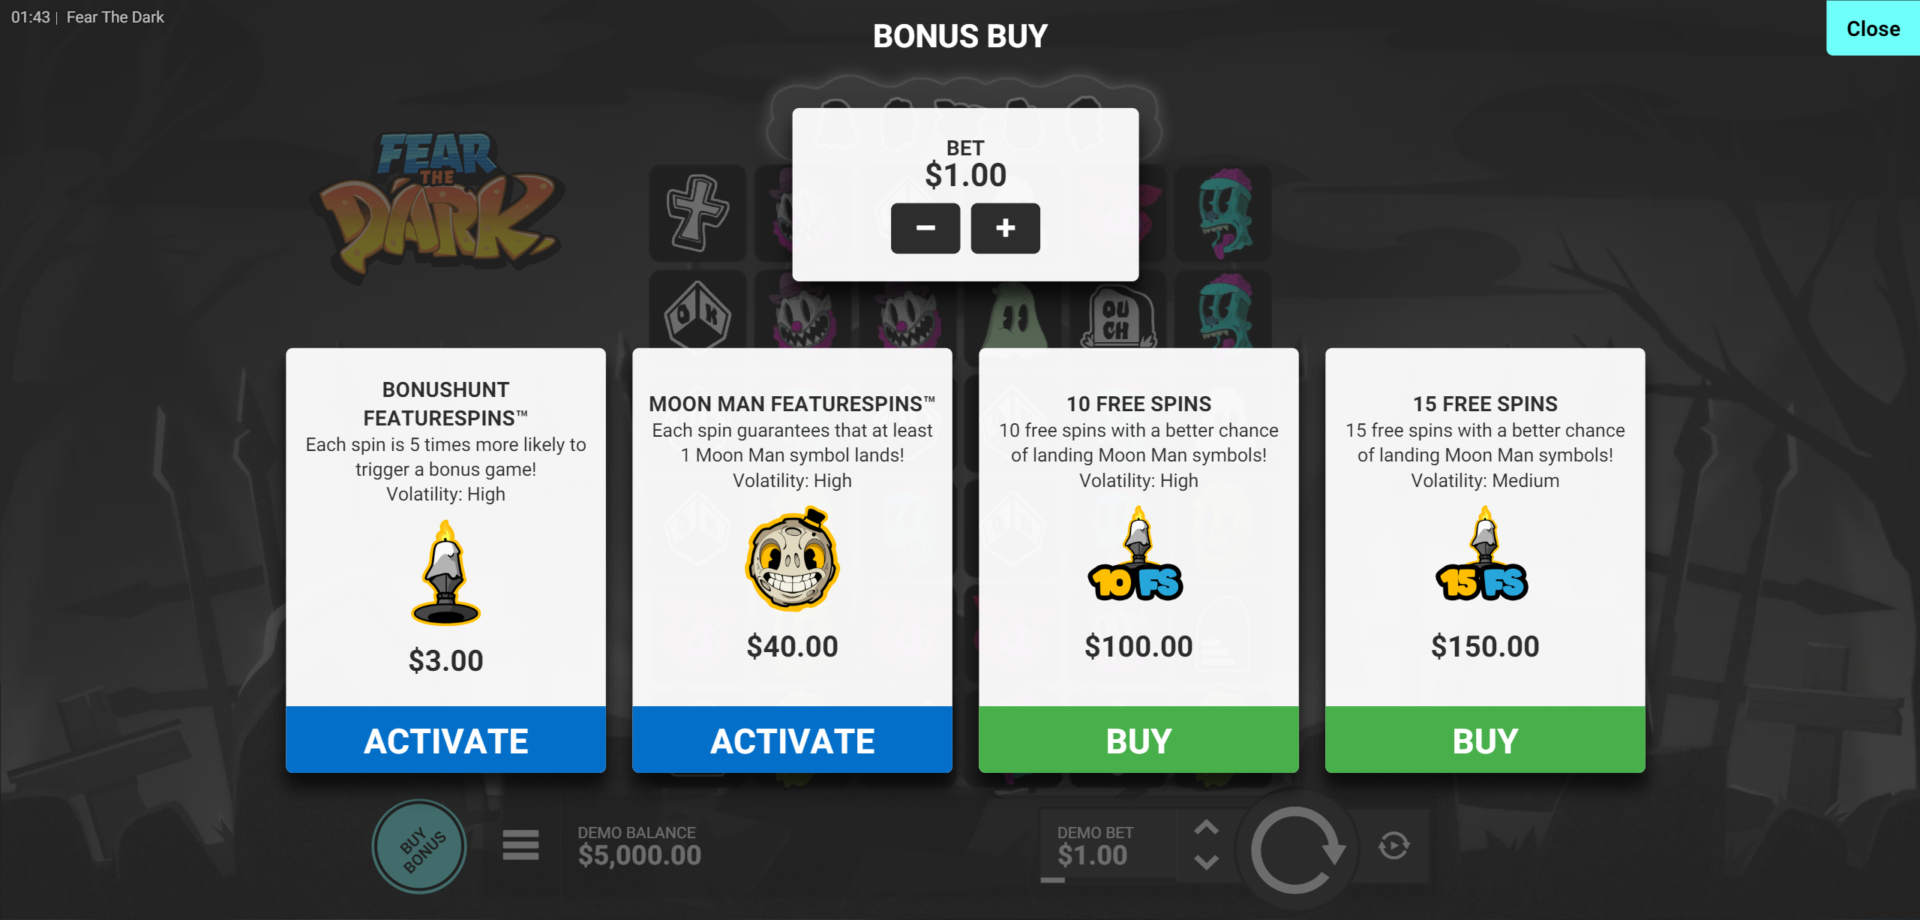 Fear the Dark Slot - Bonus Buy Options